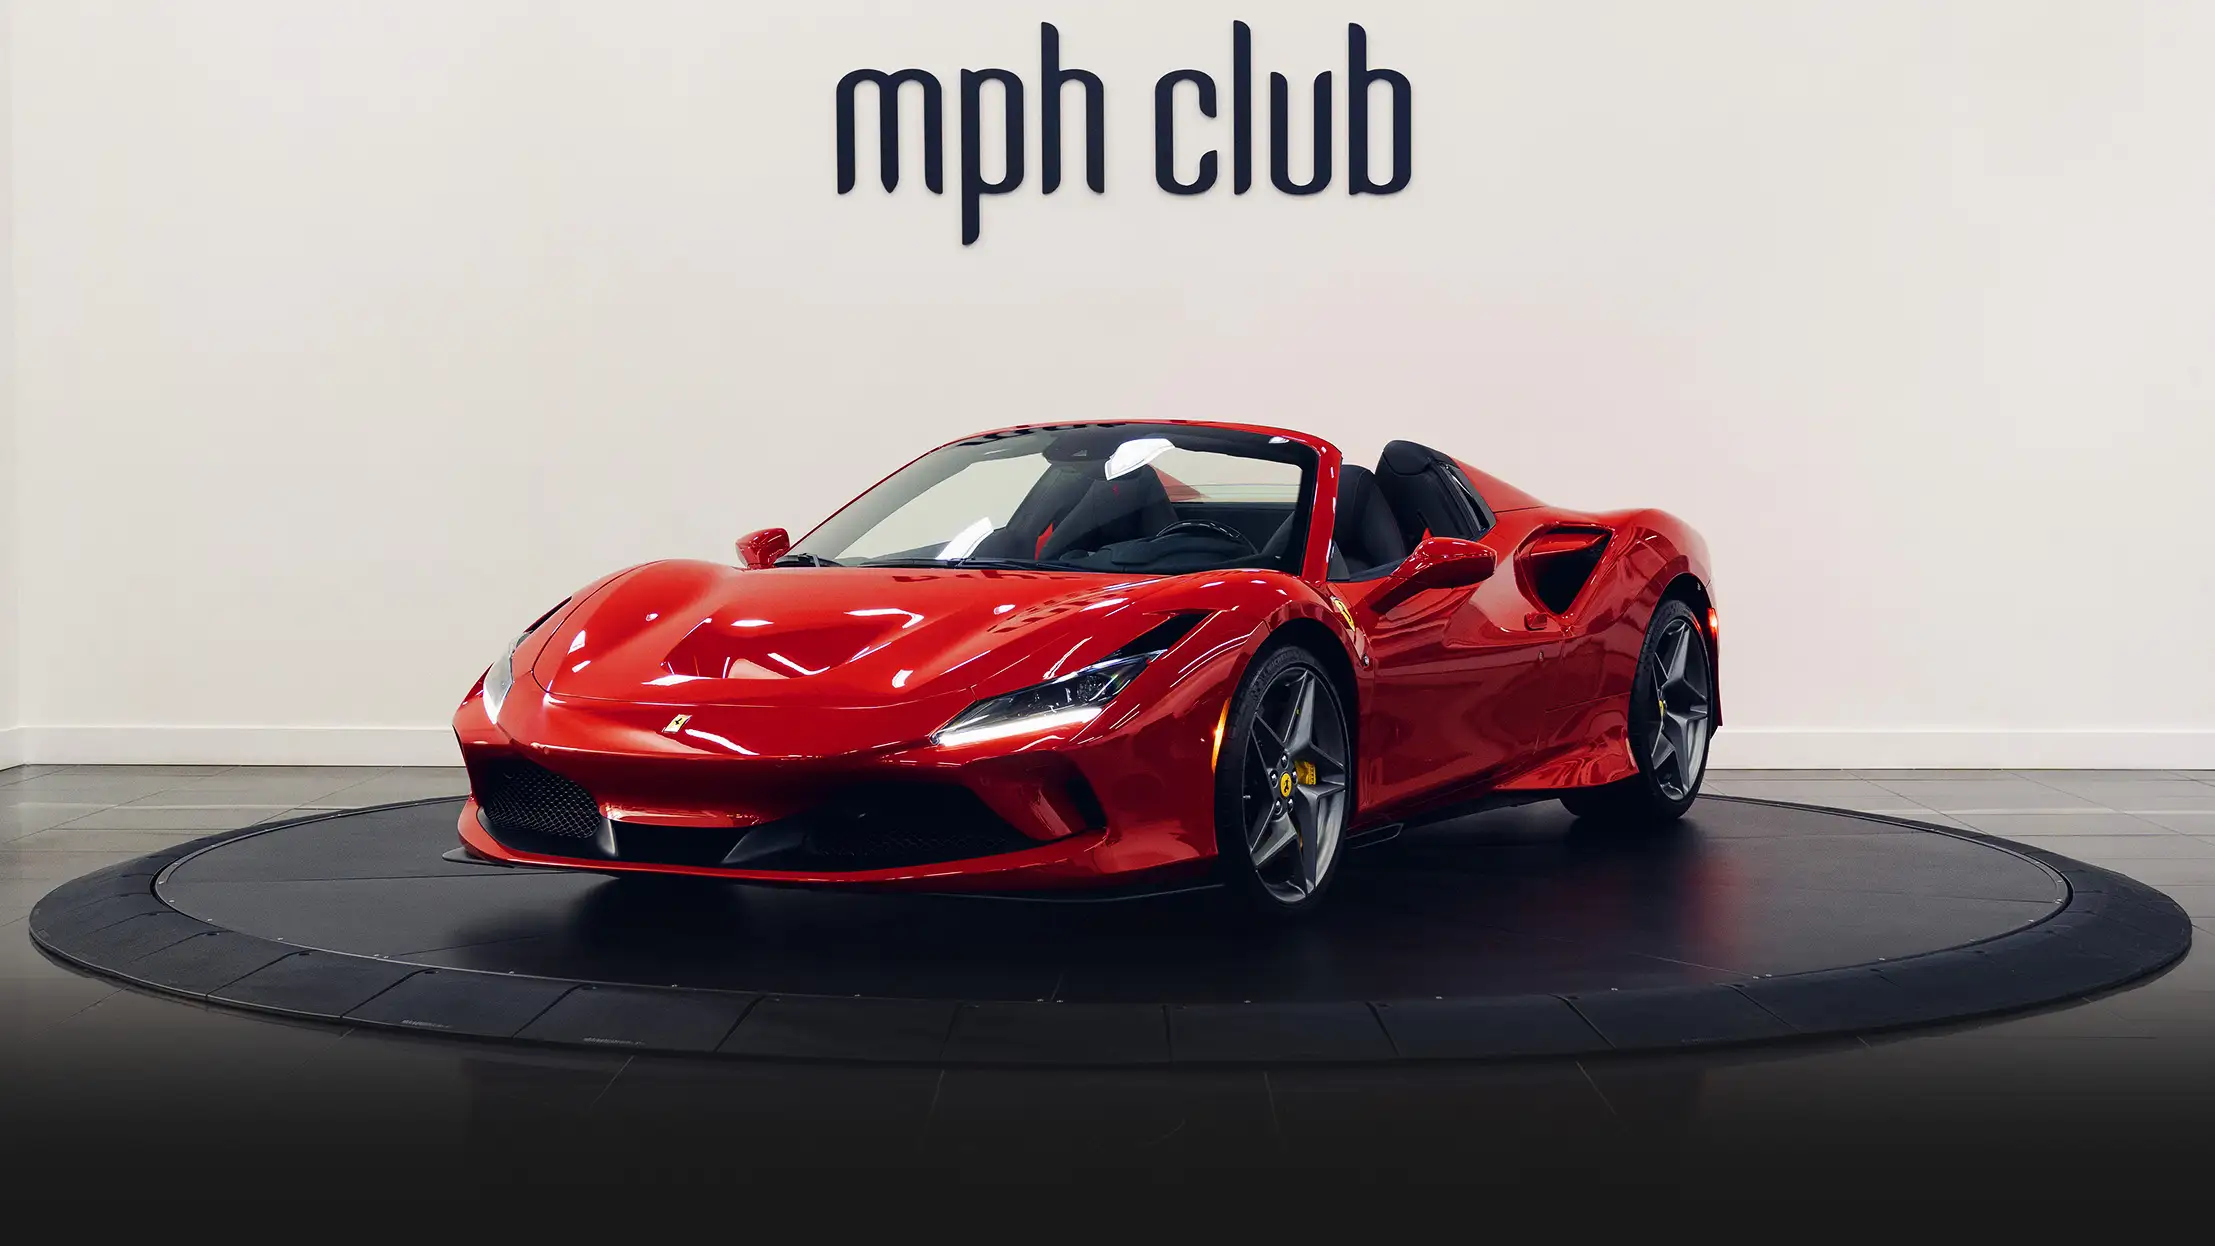 Ferrari F8 Spider rental profile view mph club